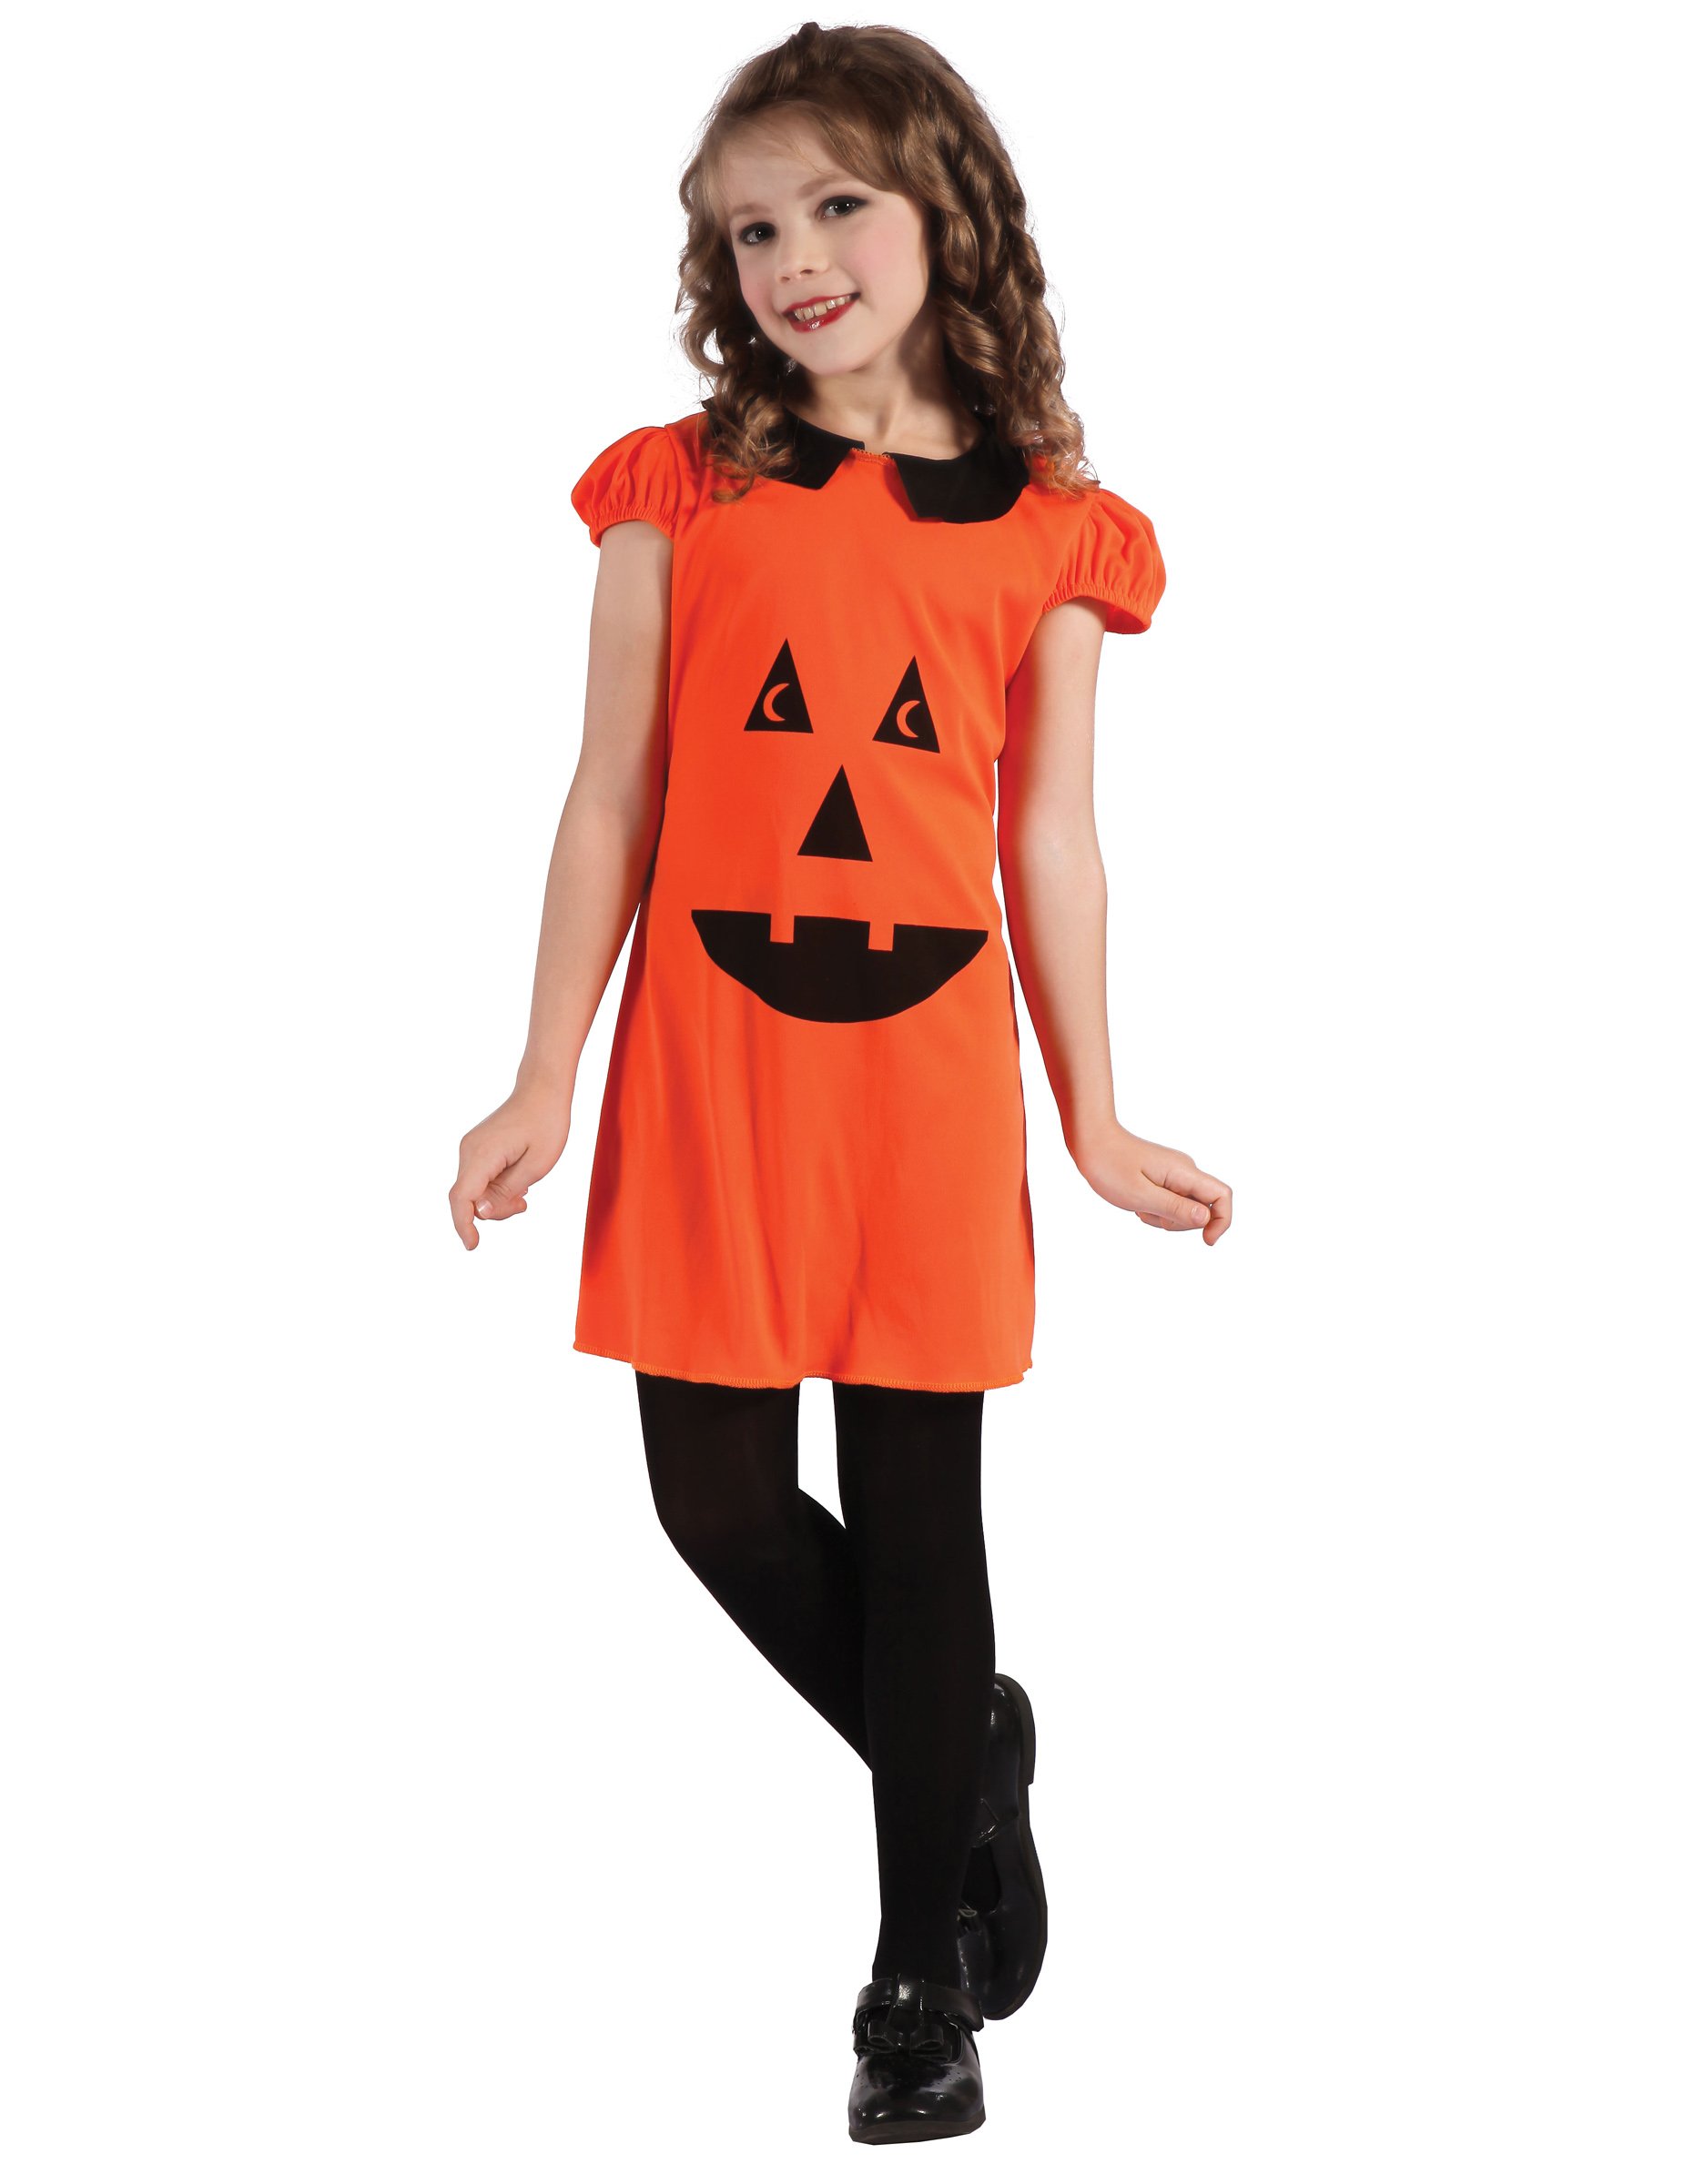 Kürbislaterne-Kinderkostüm Halloweenkostüm orange-schwarz von KARNEVAL-MEGASTORE